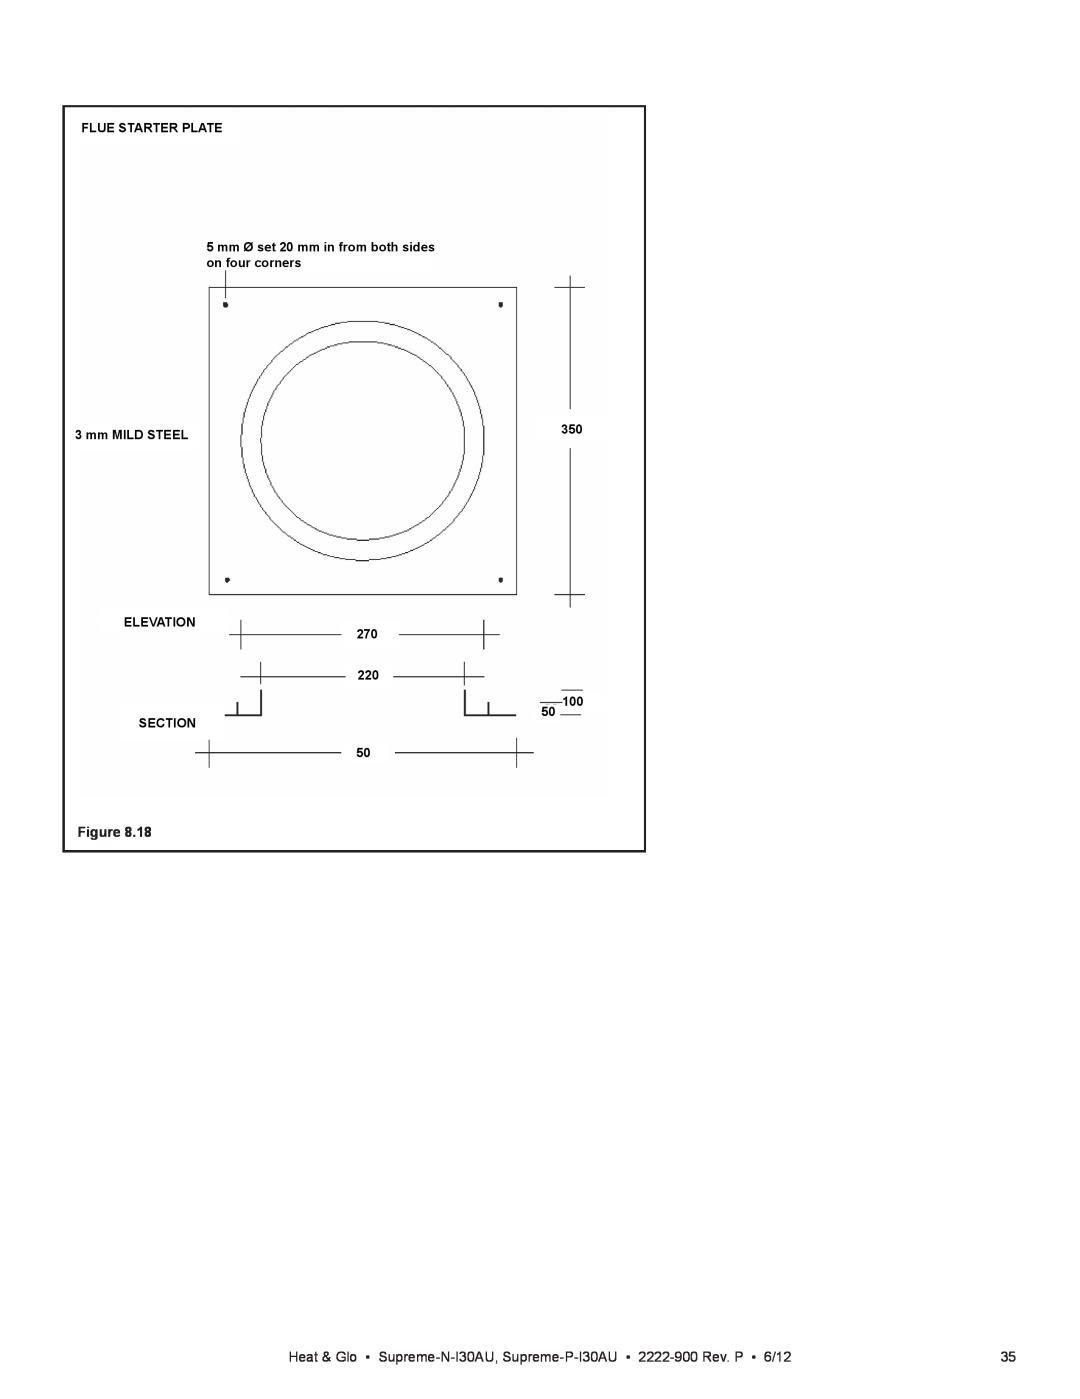 Heat & Glo LifeStyle SUPREME-N-I30AU Heat & Glo Supreme-N-I30AU, Supreme-P-I30AU 2222-900 Rev. P 6/12, Flue Starter Plate 